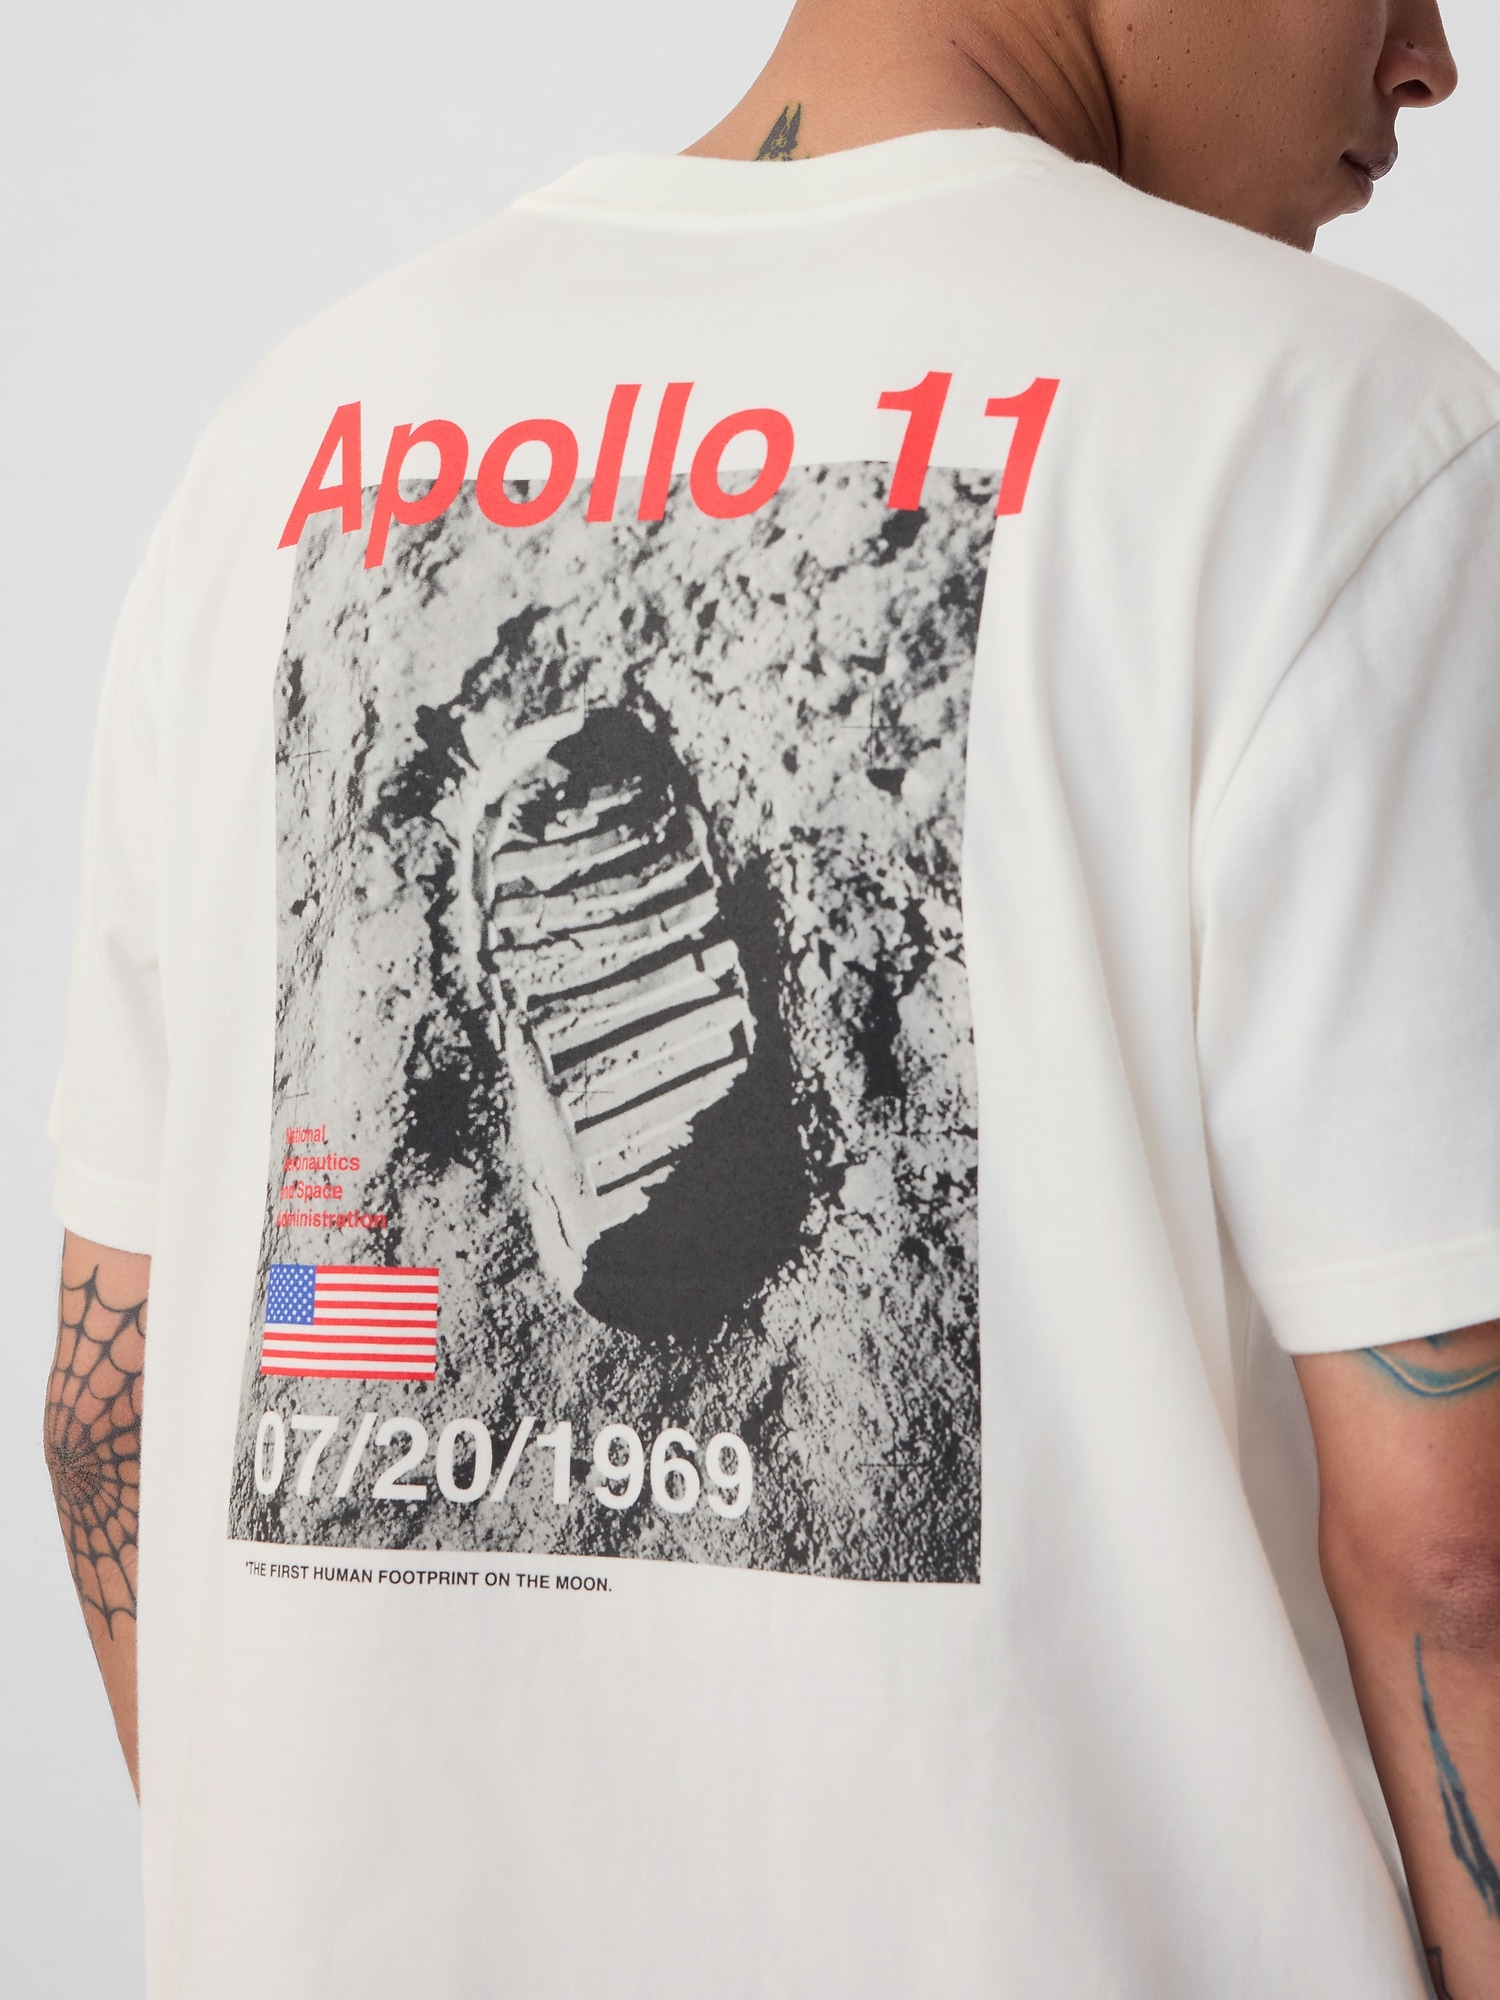 NASA Graphic T-Shirt